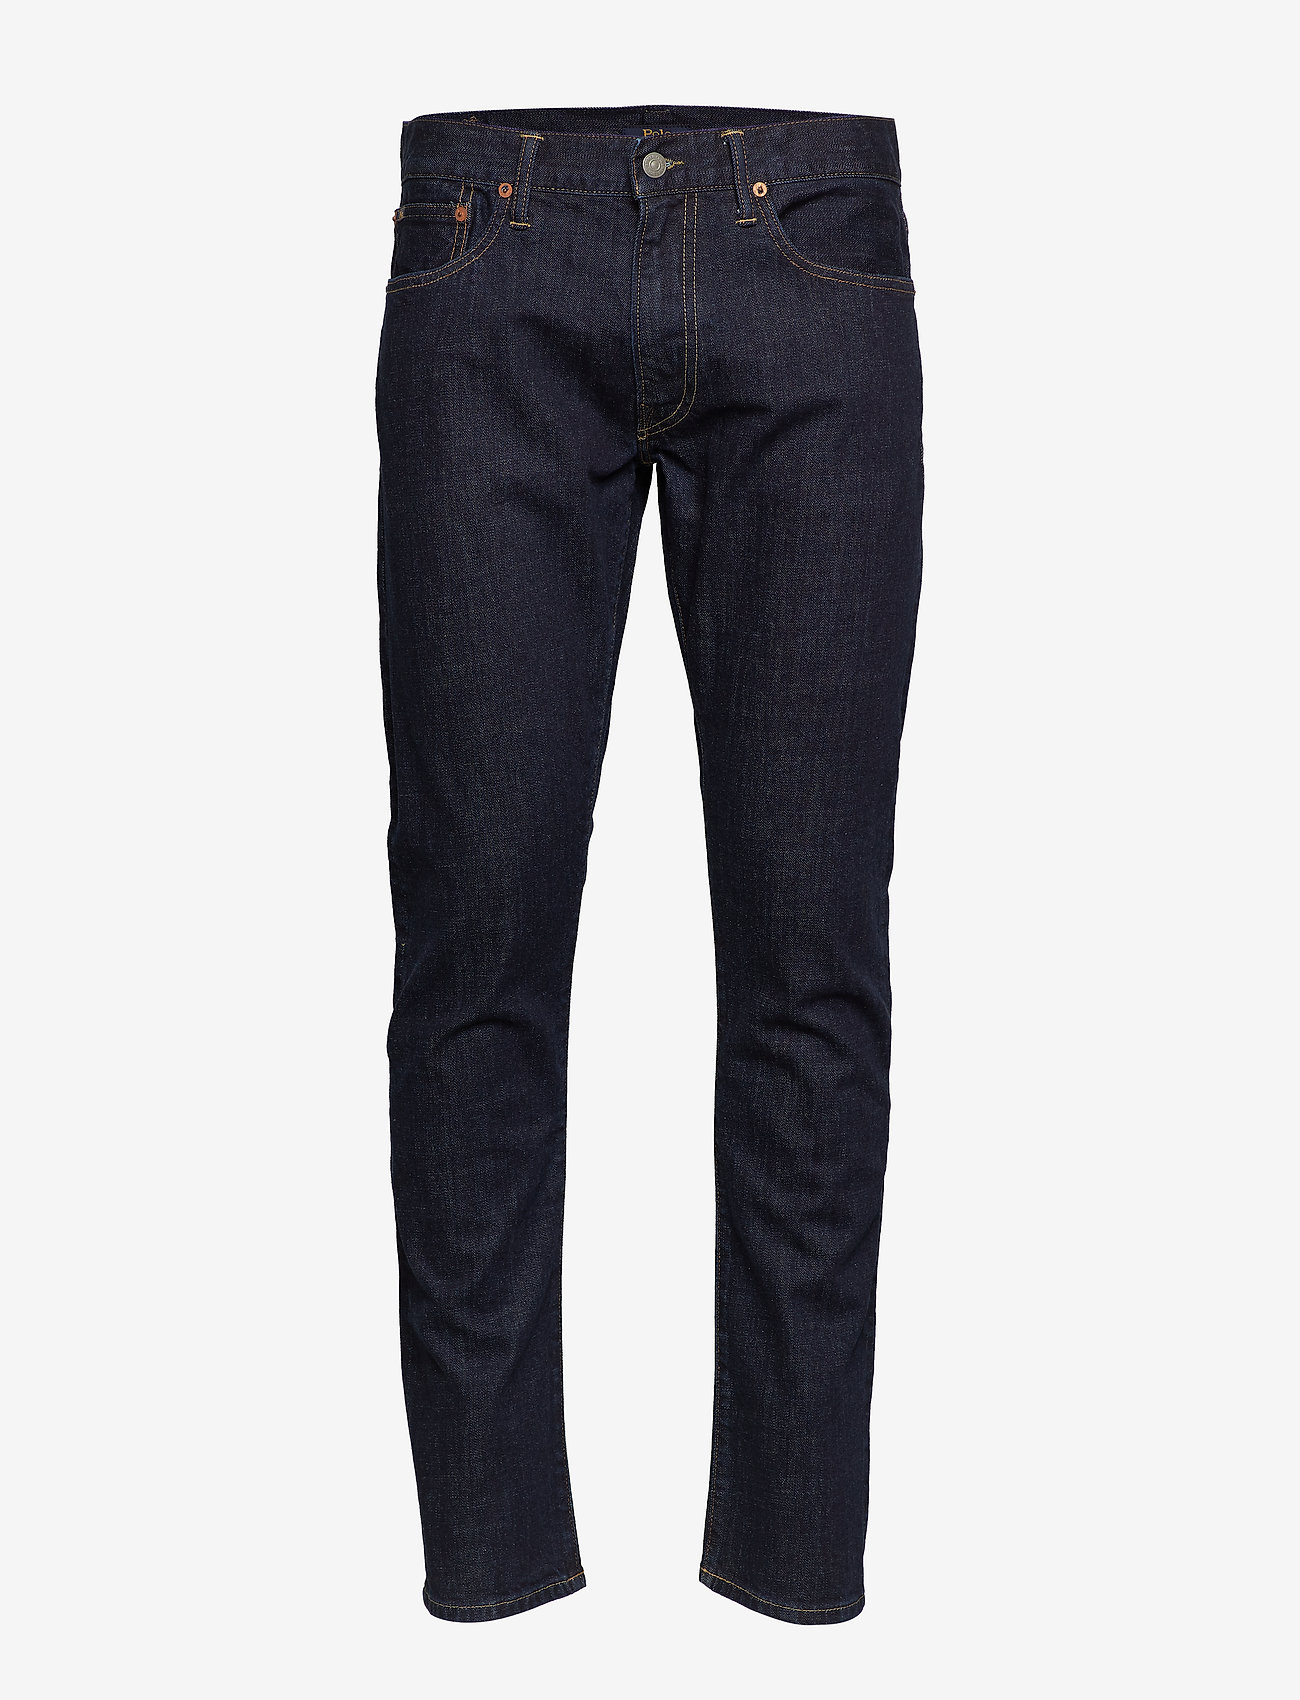 men's sullivan slim stretch jeans